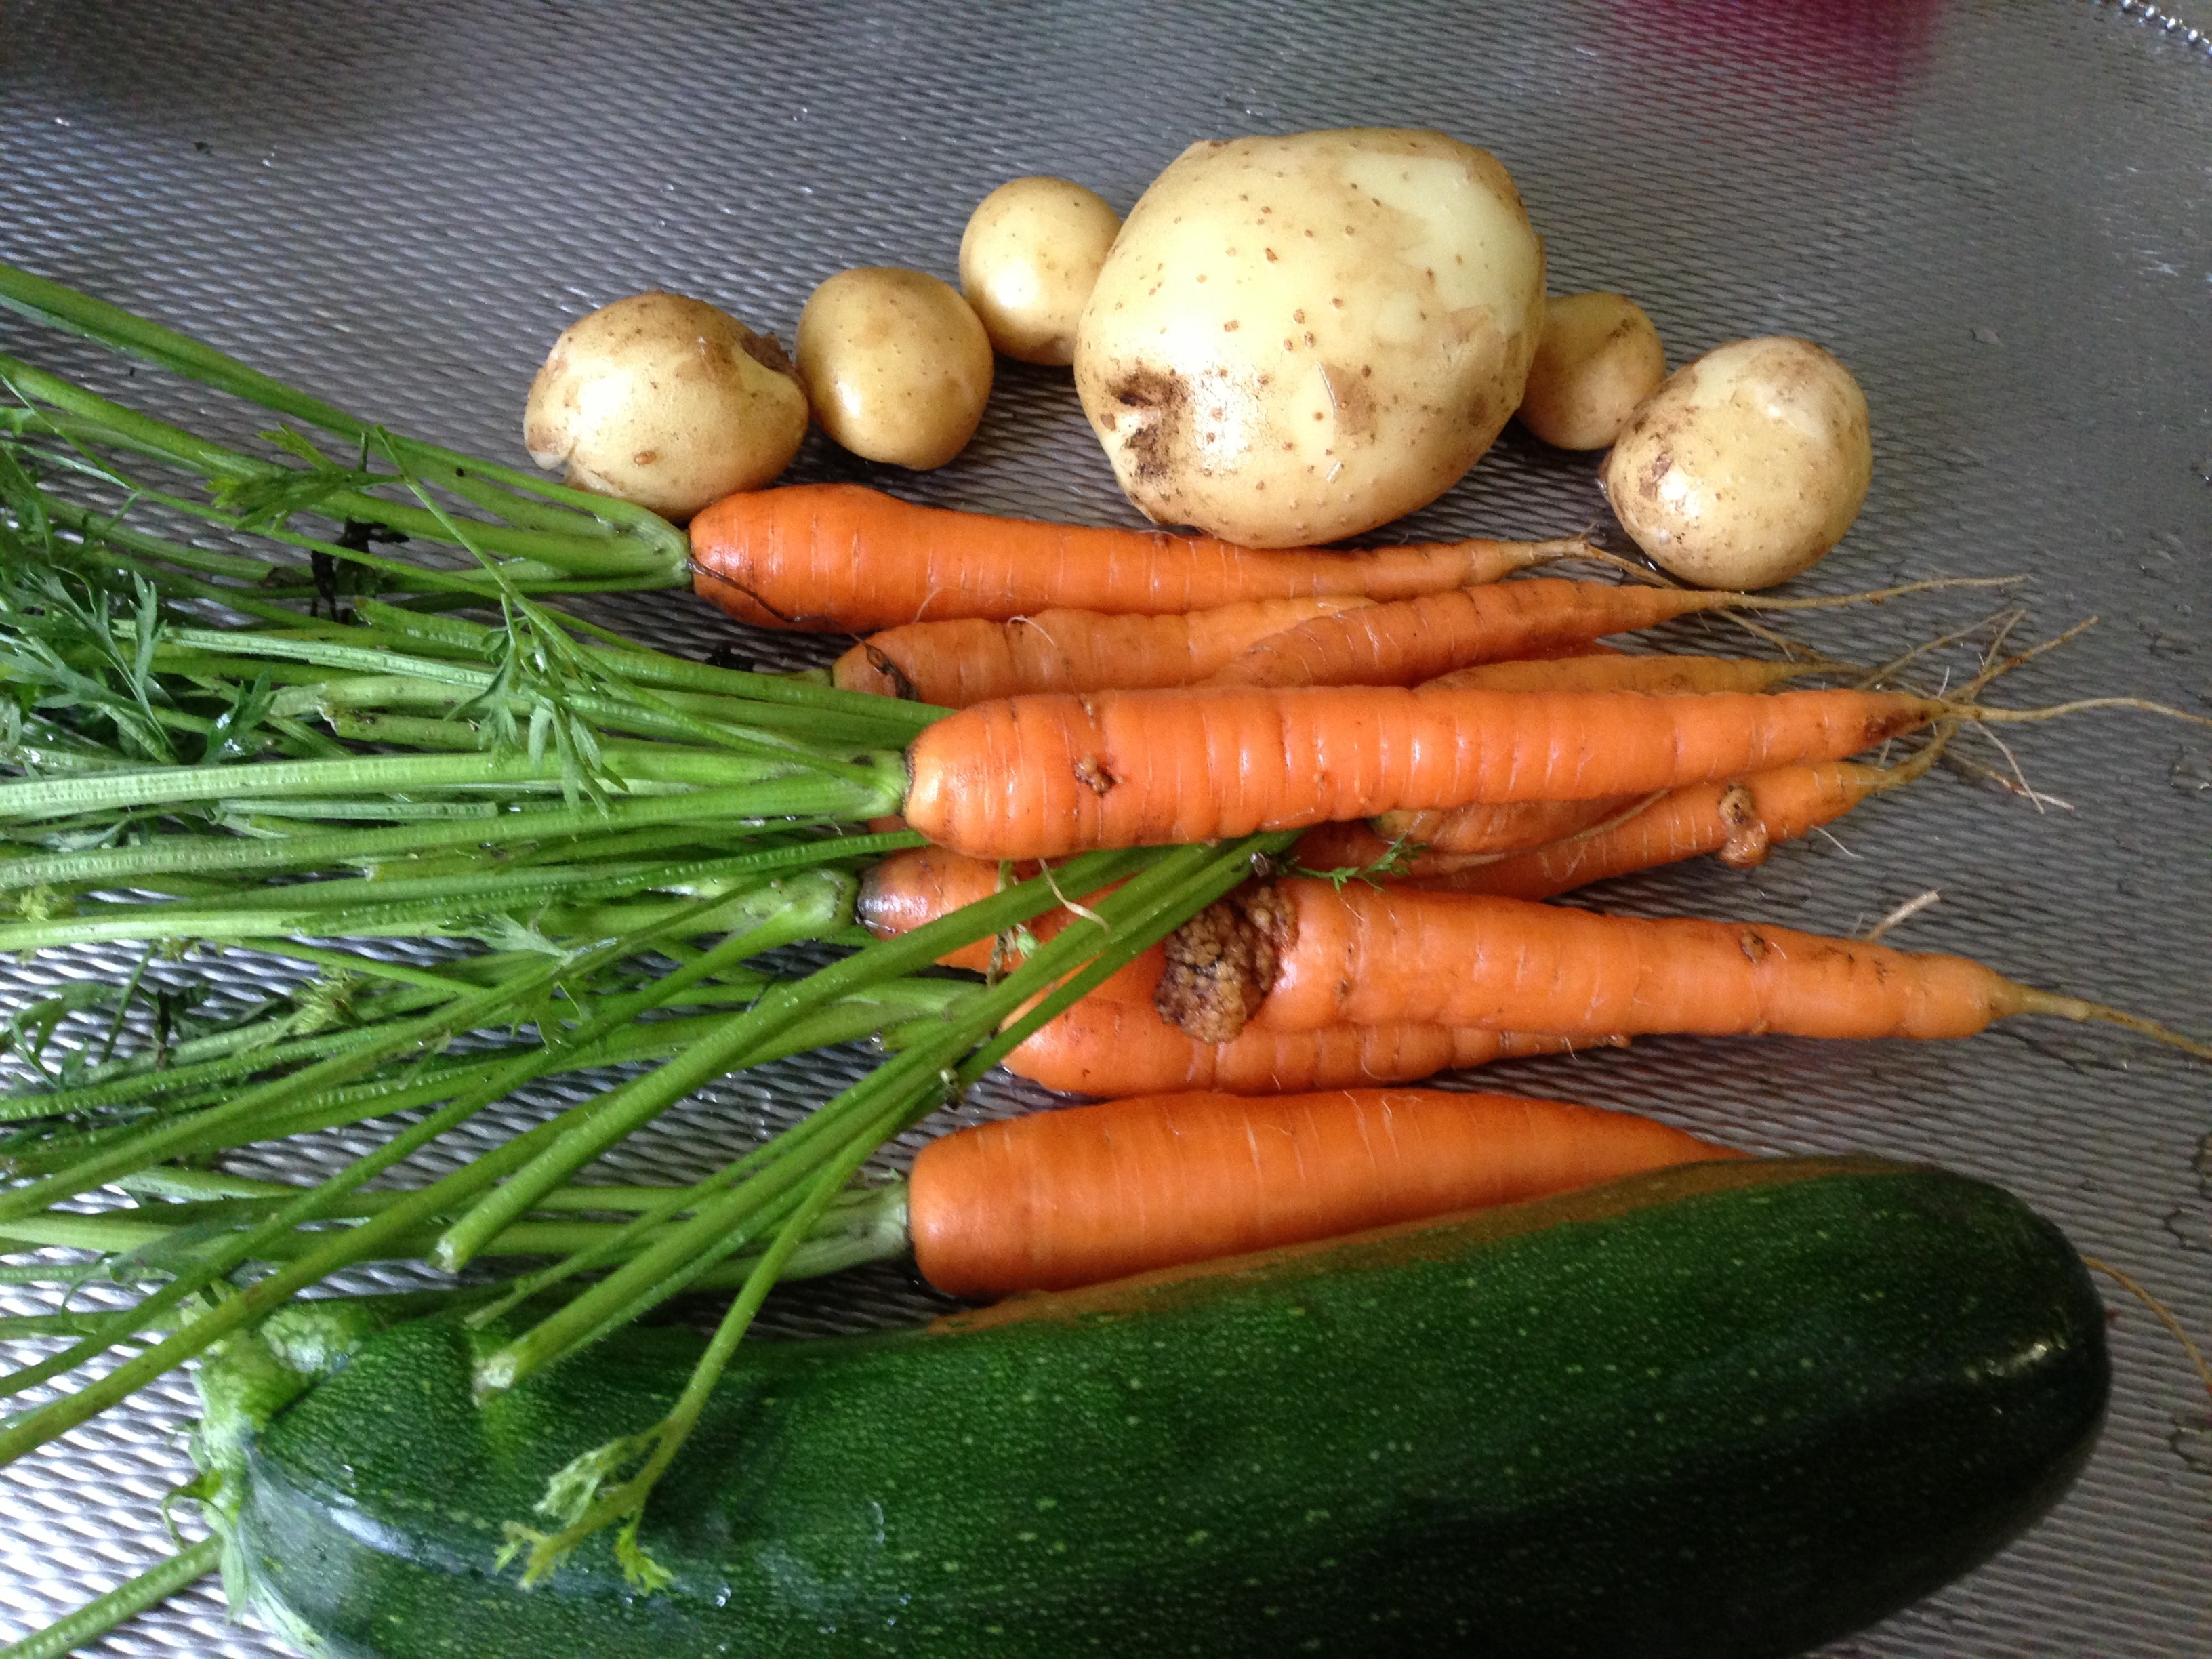 carrots, potatoes and cucumber